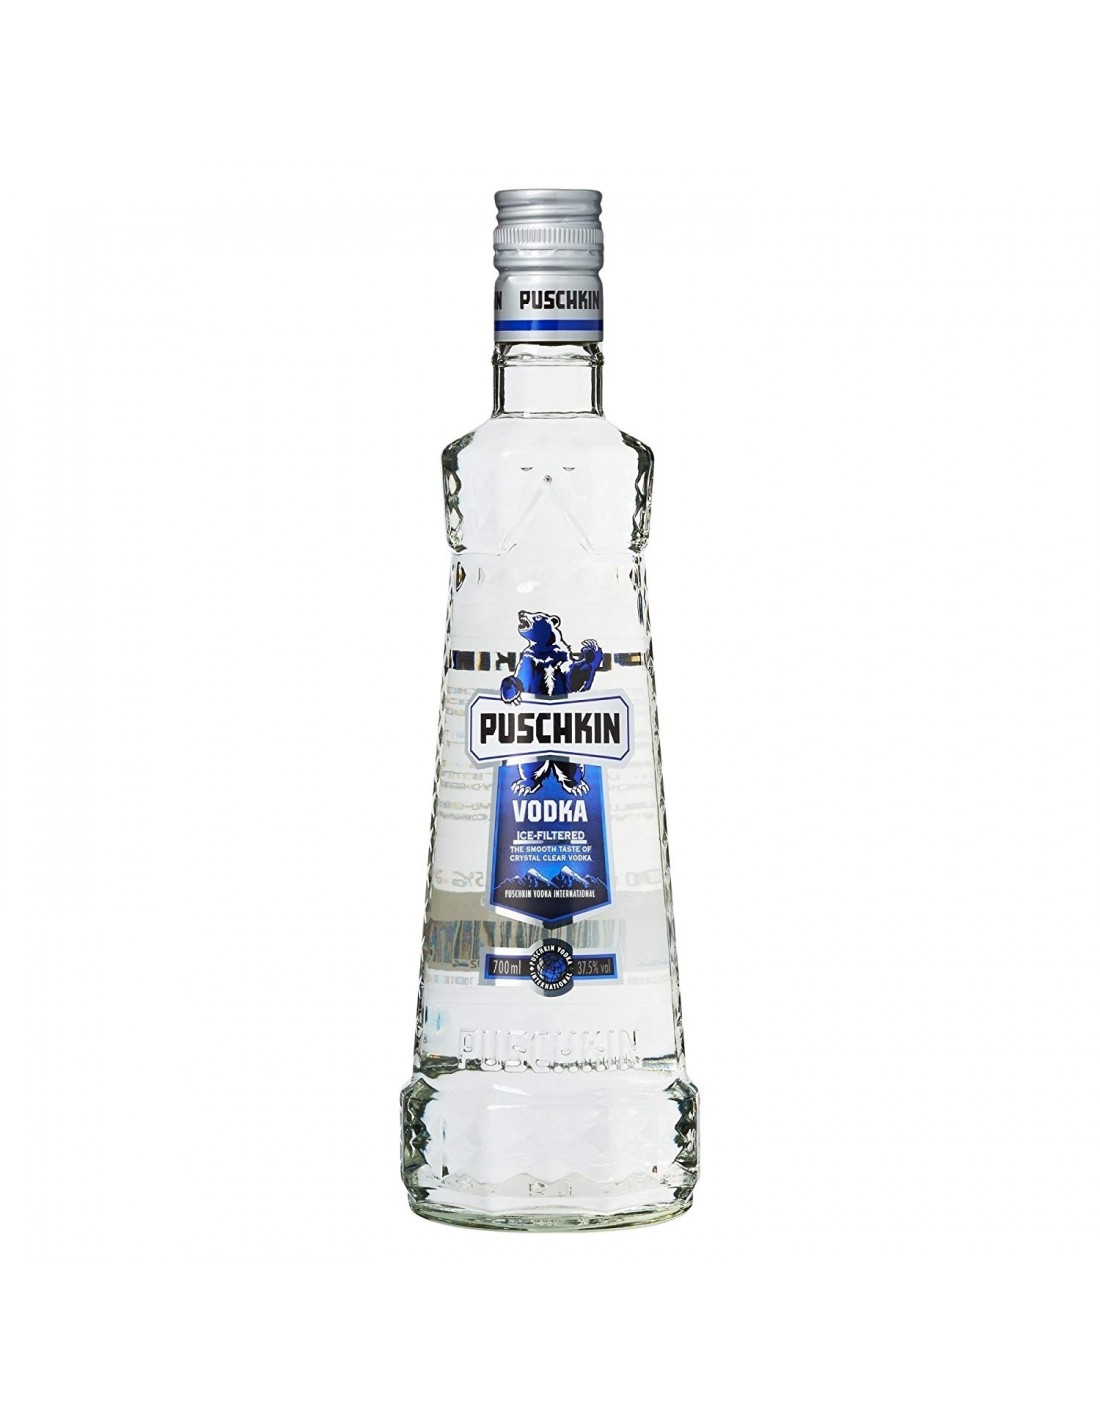 Vodca Puschkin, 0.7L, 37.5% alc., Germania alcooldiscount.ro